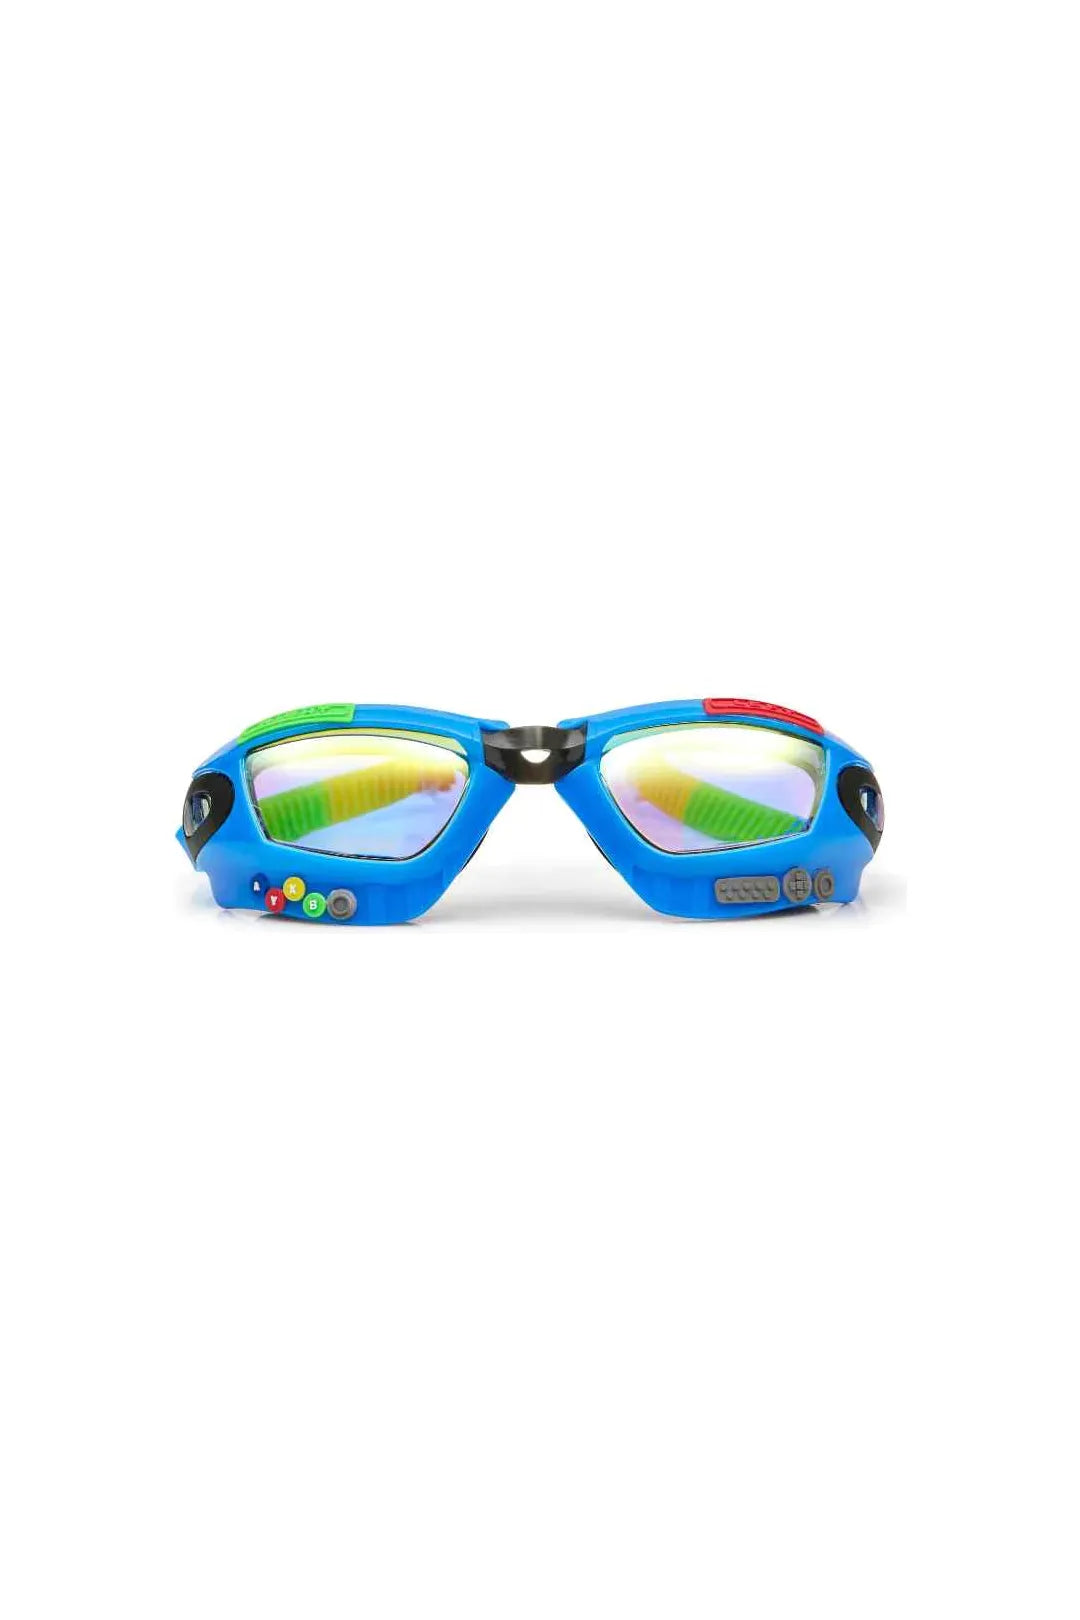 Bling20 Swim Goggles - Gamer - Console Blue